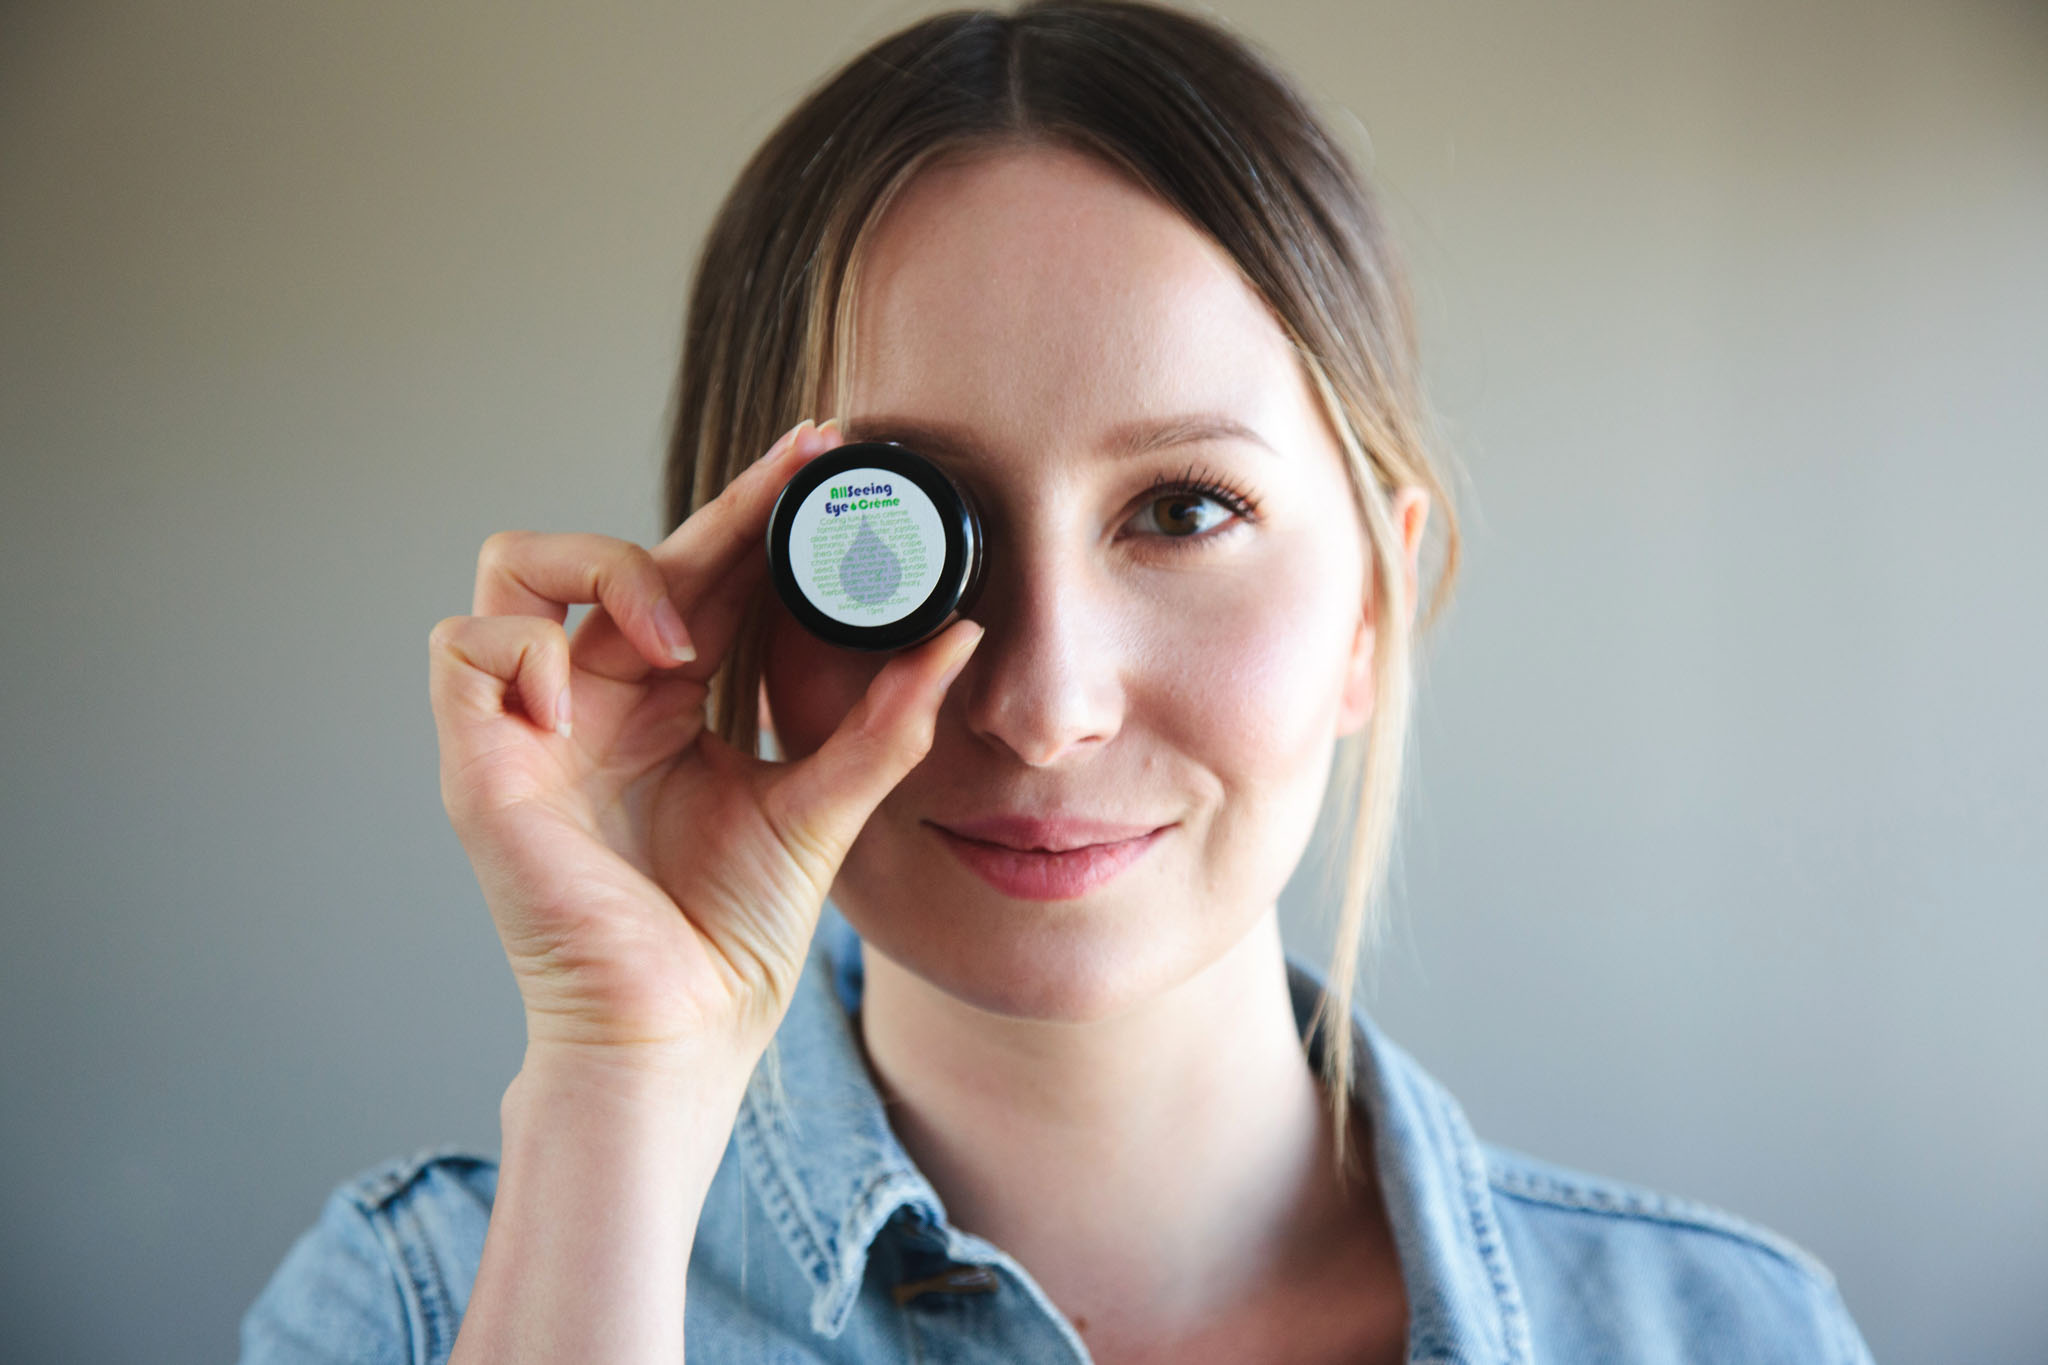 Living Libations All Seeing Eye Cream - Danielle's Spring Wakeup Favourites | Kolya Naturals, Canada